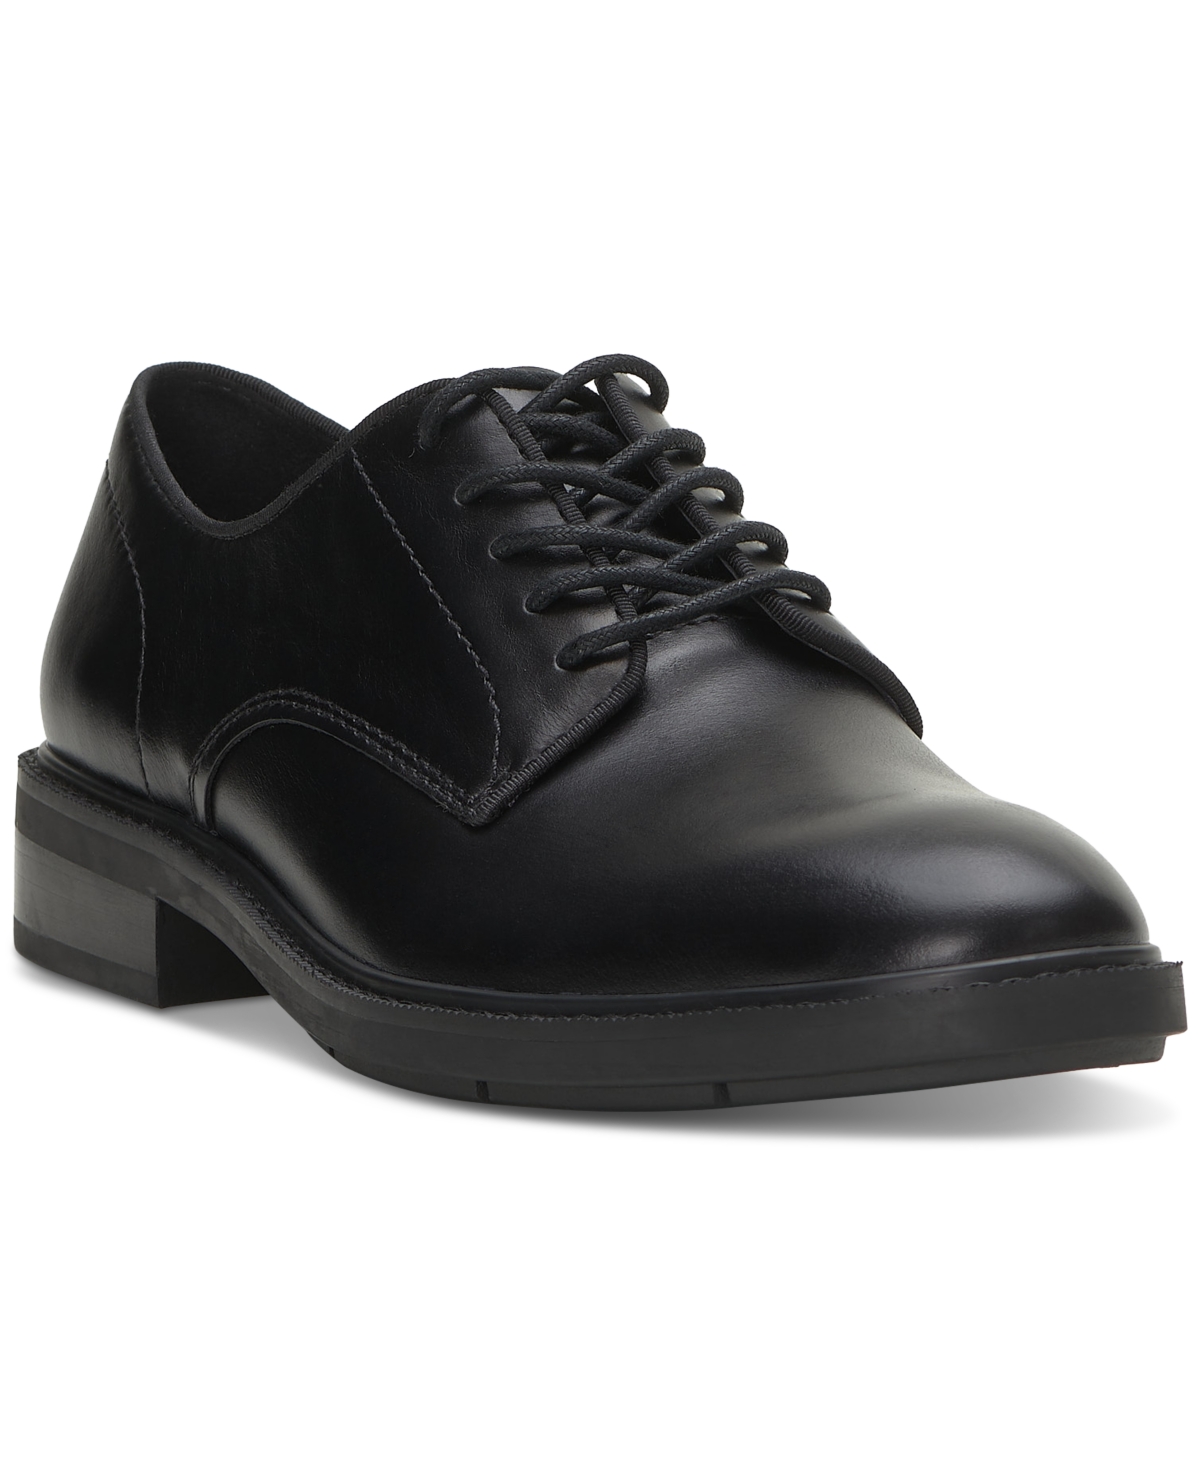 Men's Ferdie Dress Oxford Shoe - Black